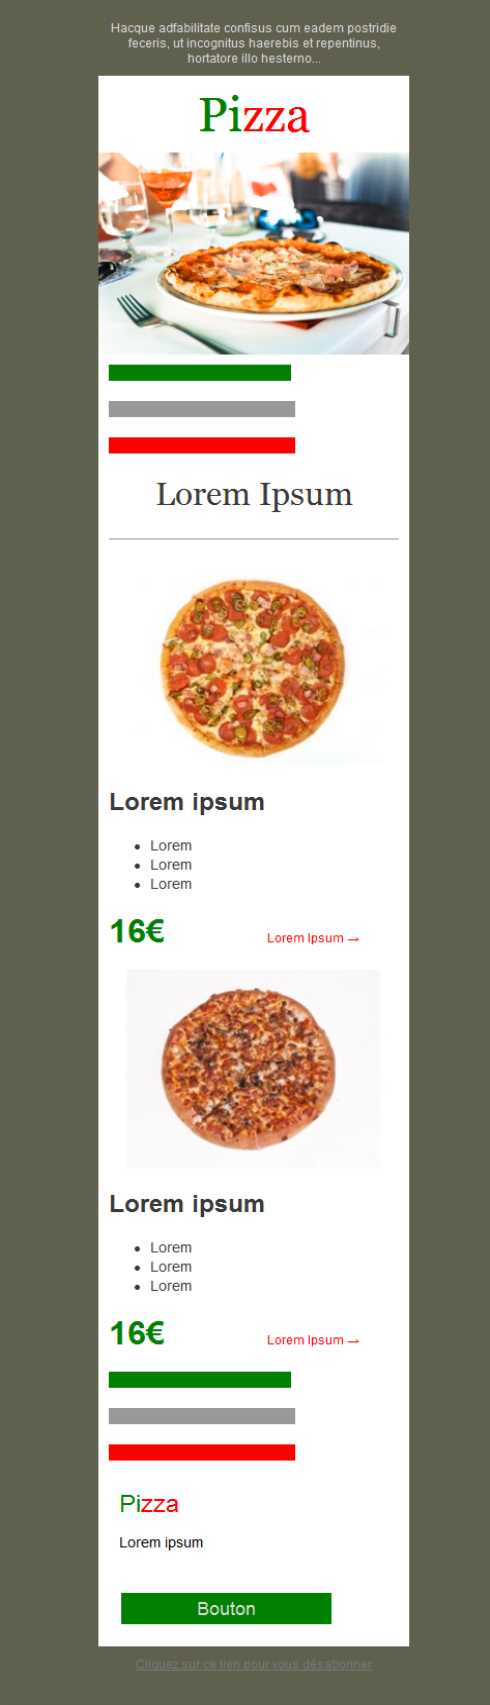 Templates Emailing Pizza Sarbacane